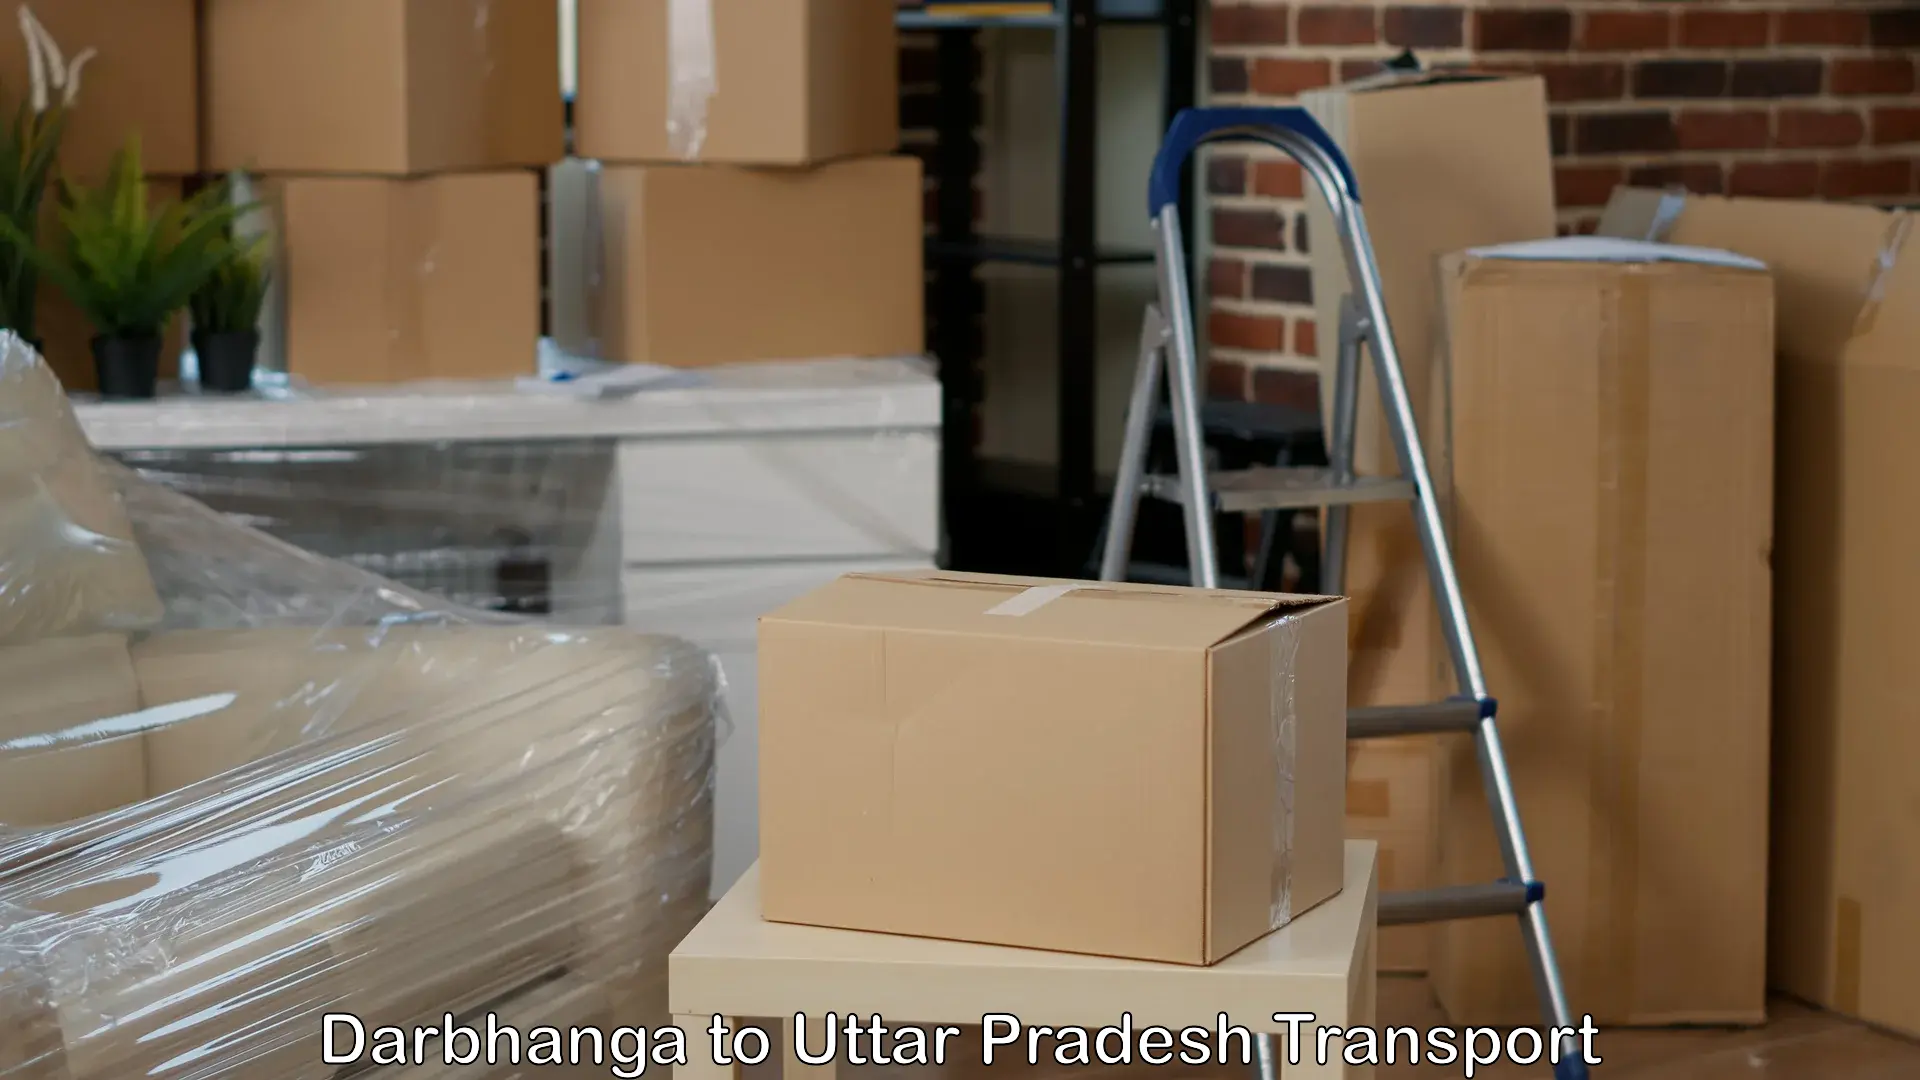 Shipping partner Darbhanga to Laharpur